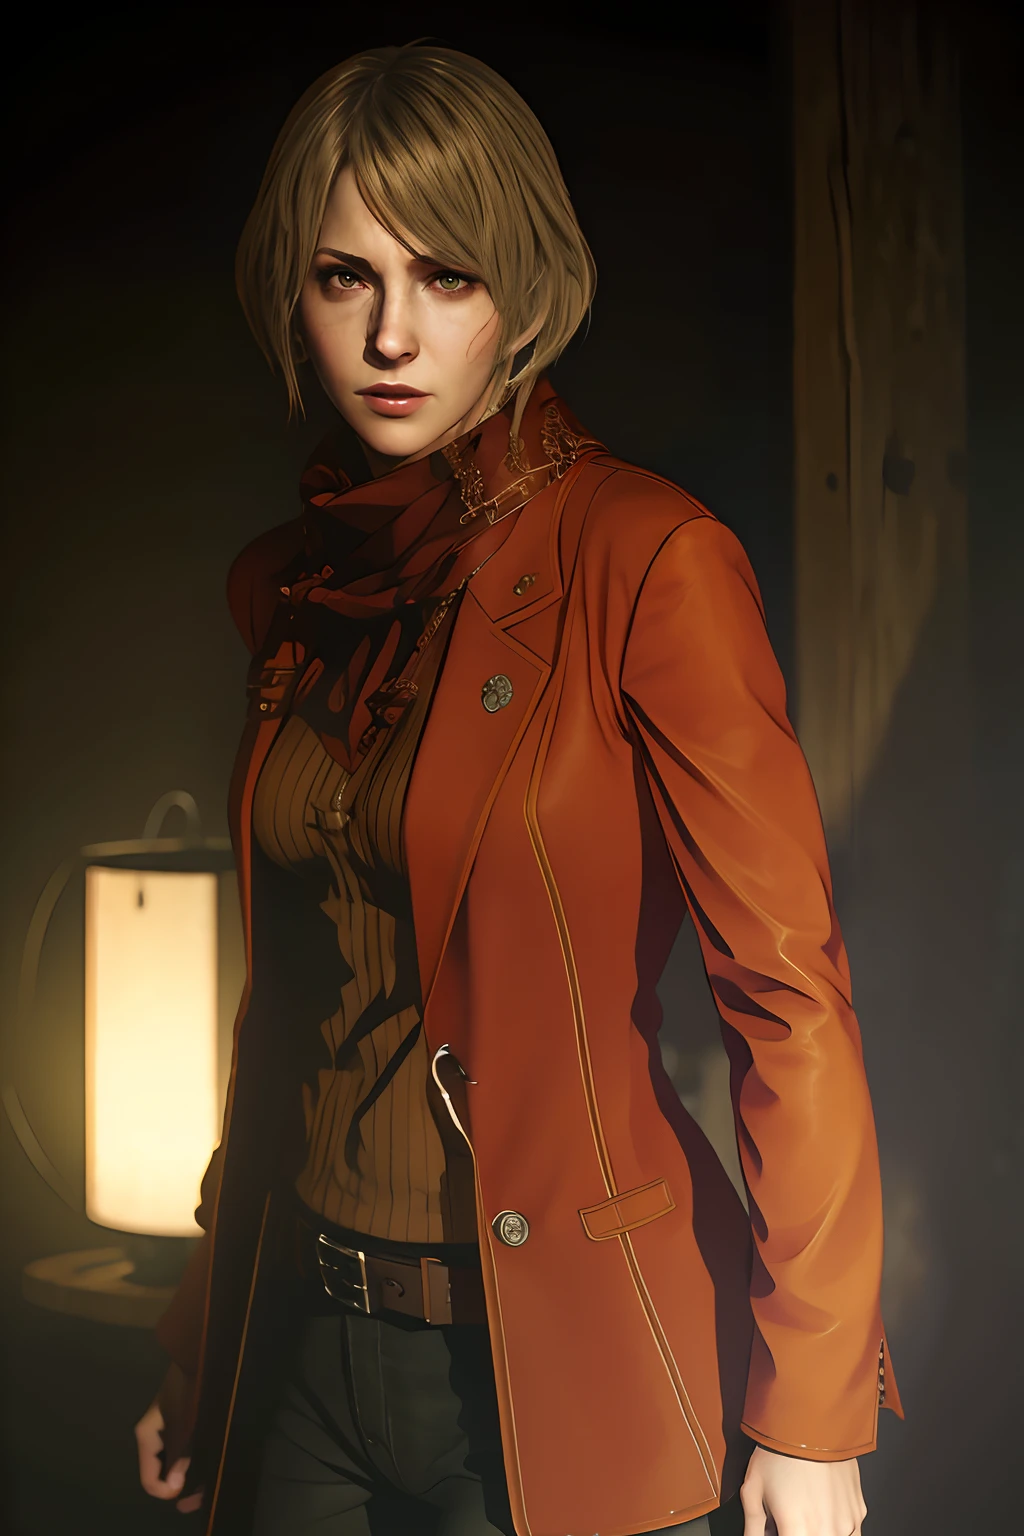 Ashley aus Resident Evil 4 steht still